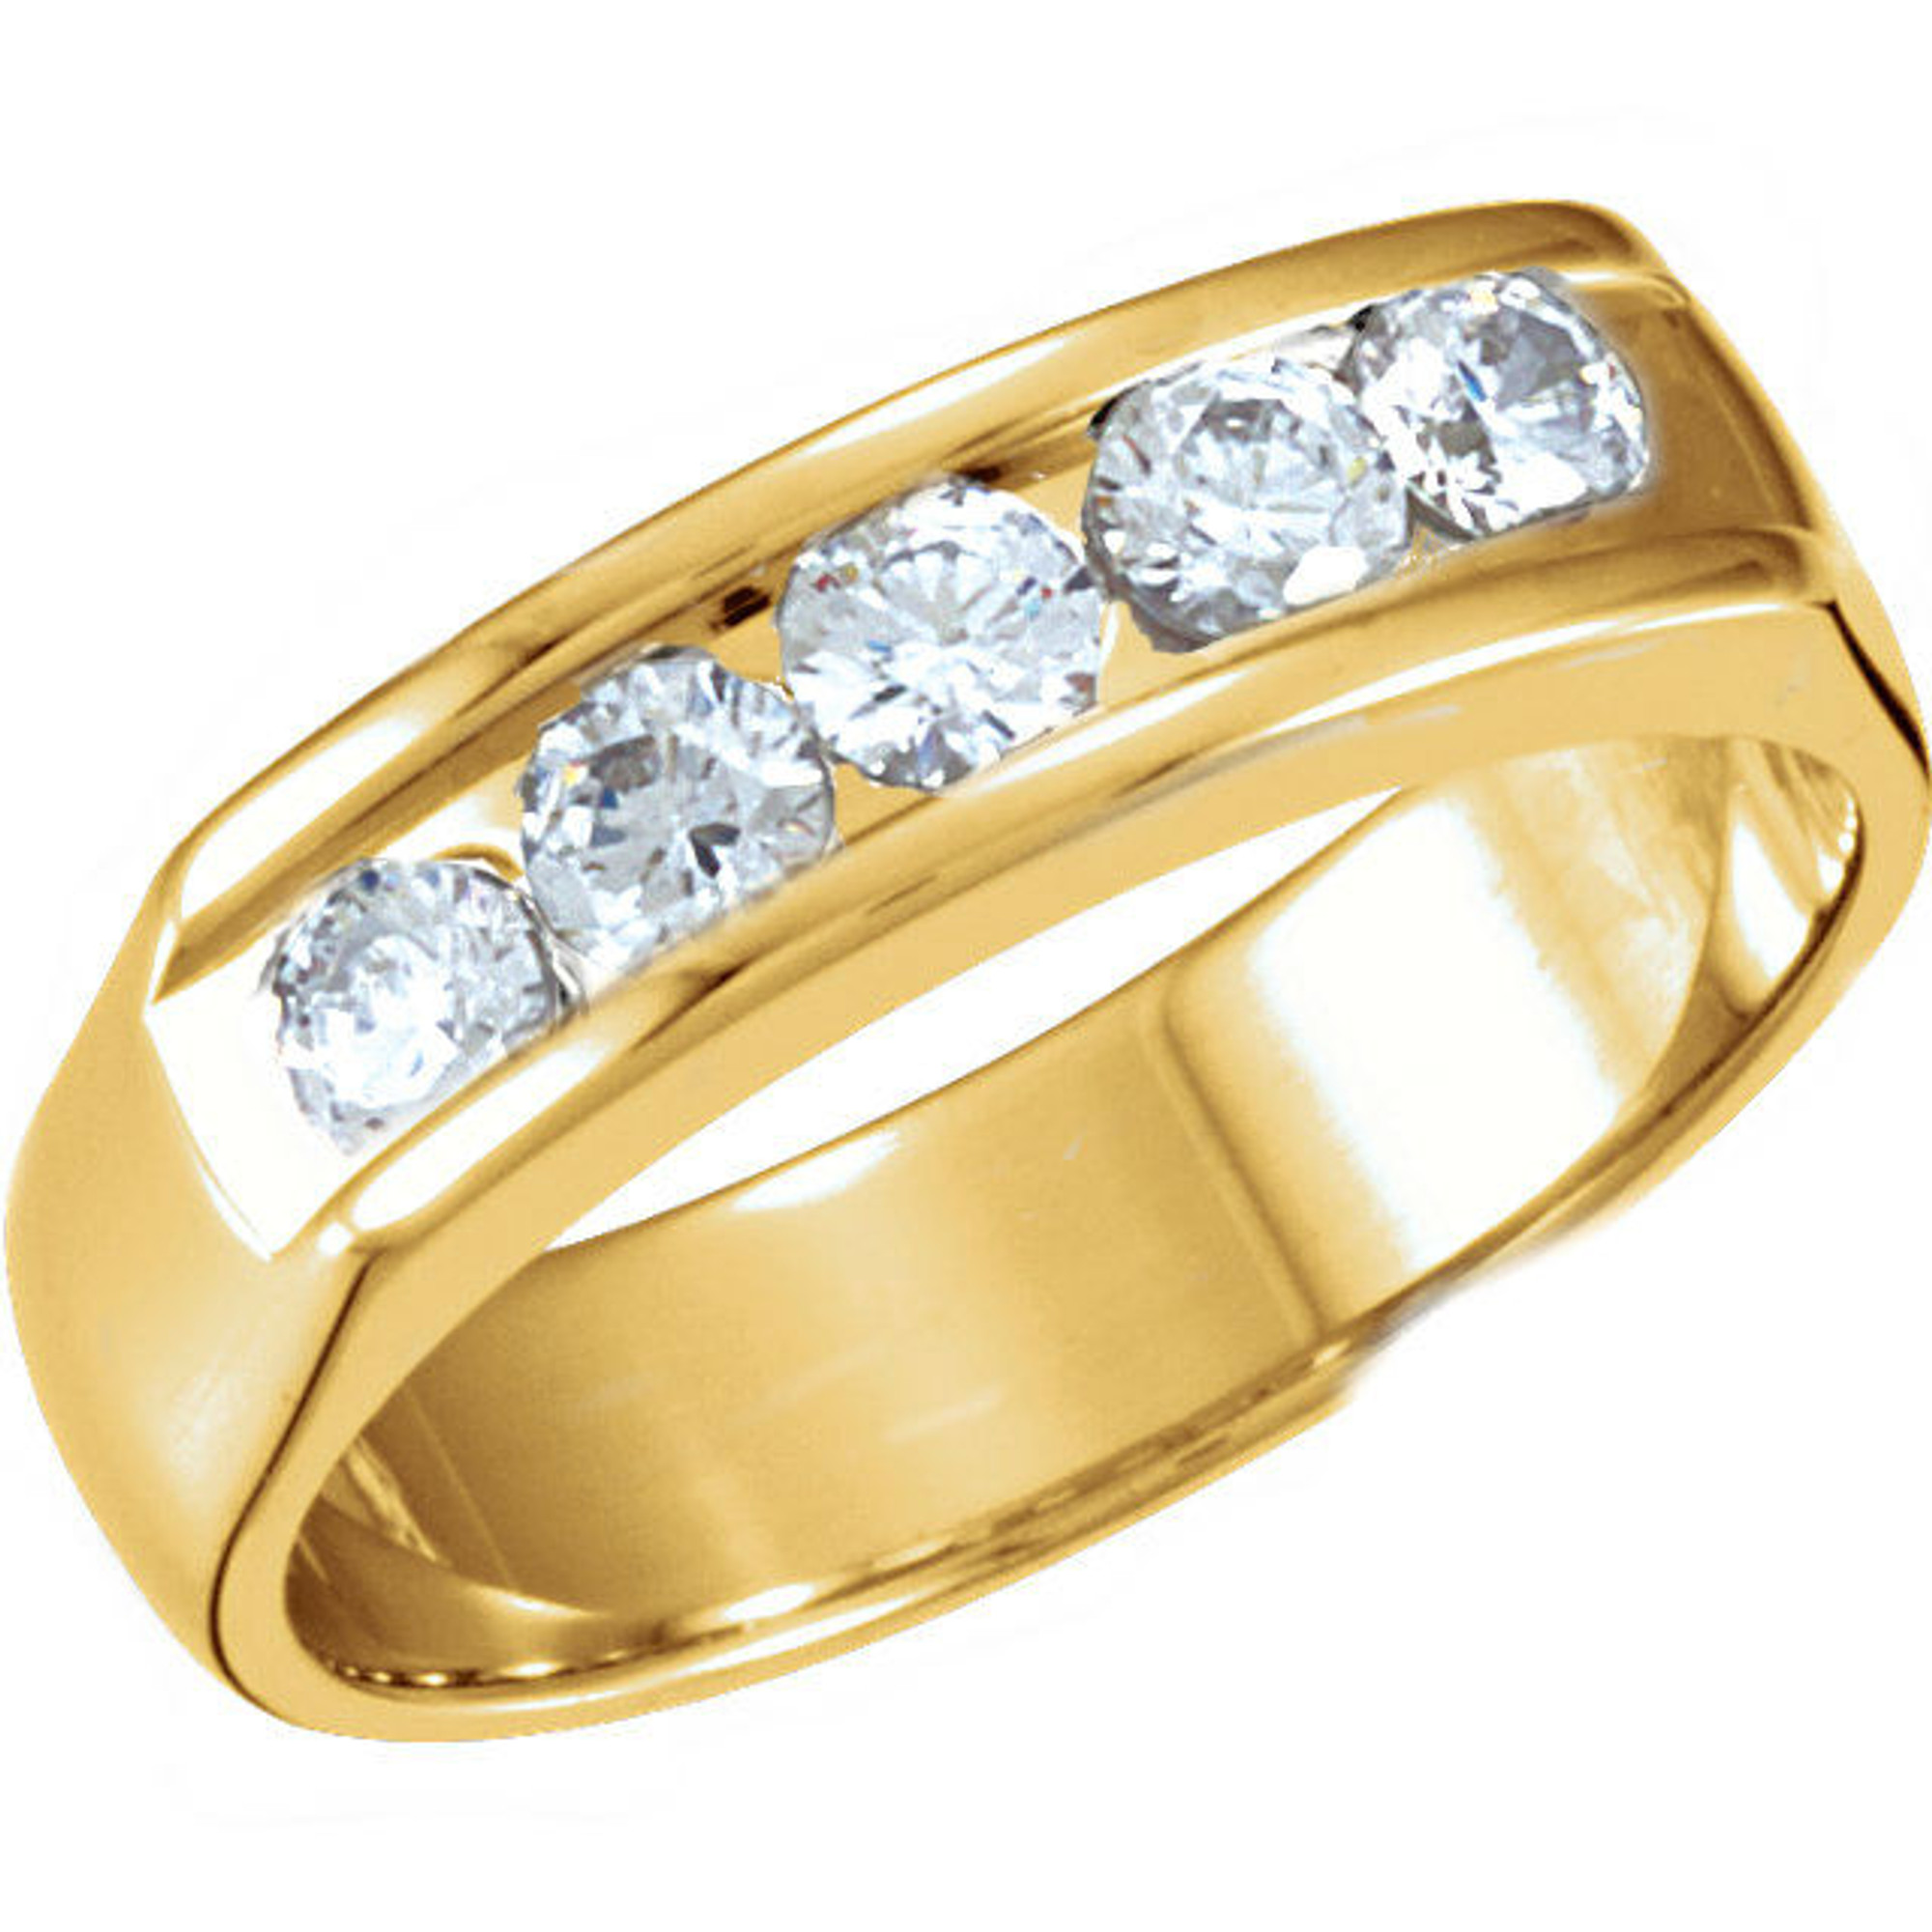 2.20 Ct Round Created Diamond Five Stone Engagement Ring 14K White Gold  Plated | eBay